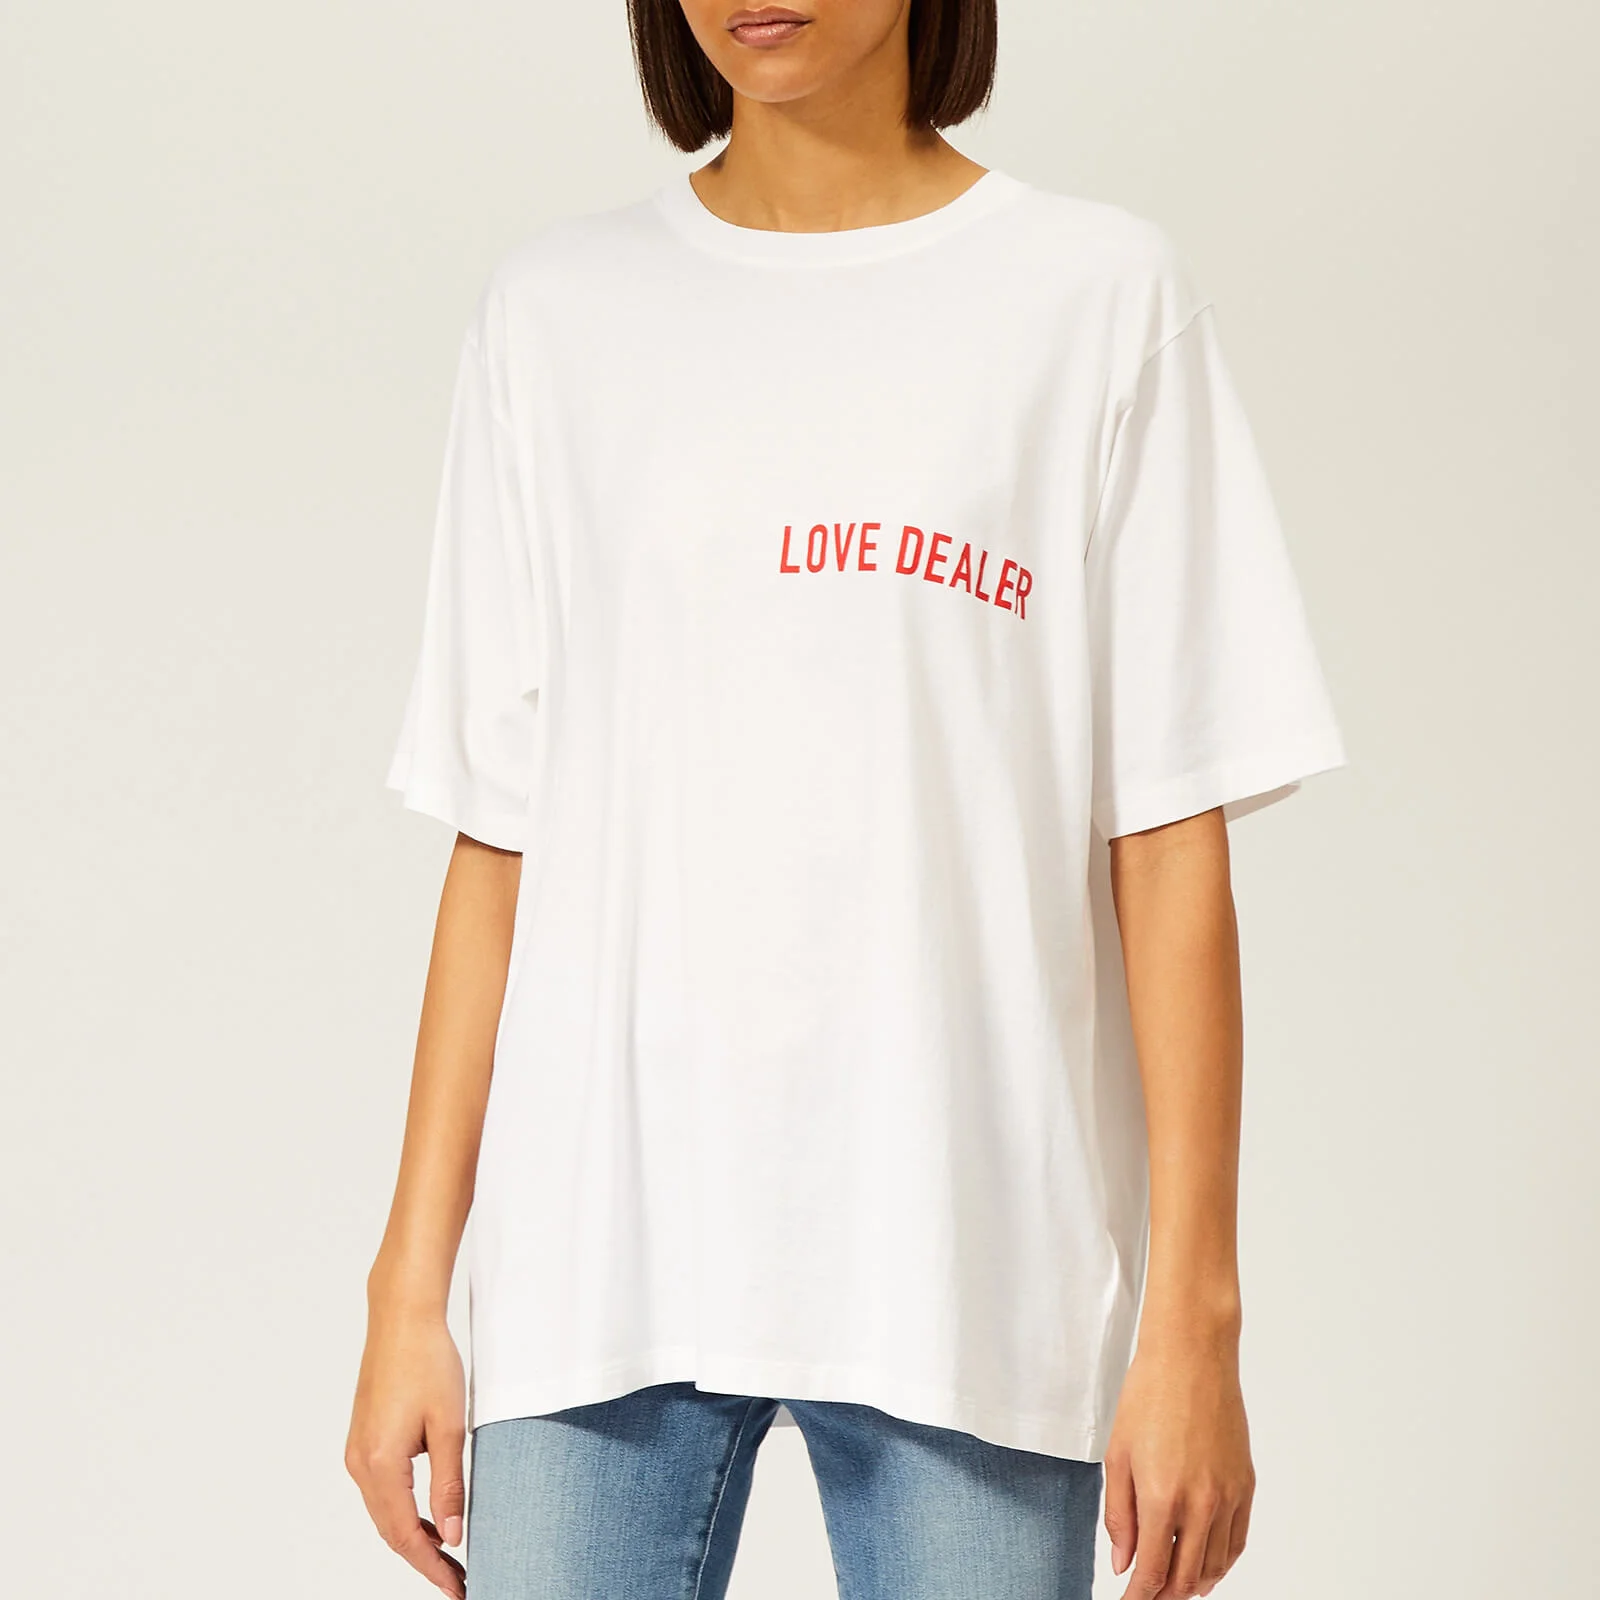 Golden Goose Women's Cindy T-Shirt - White/Red Love Dealer Image 1